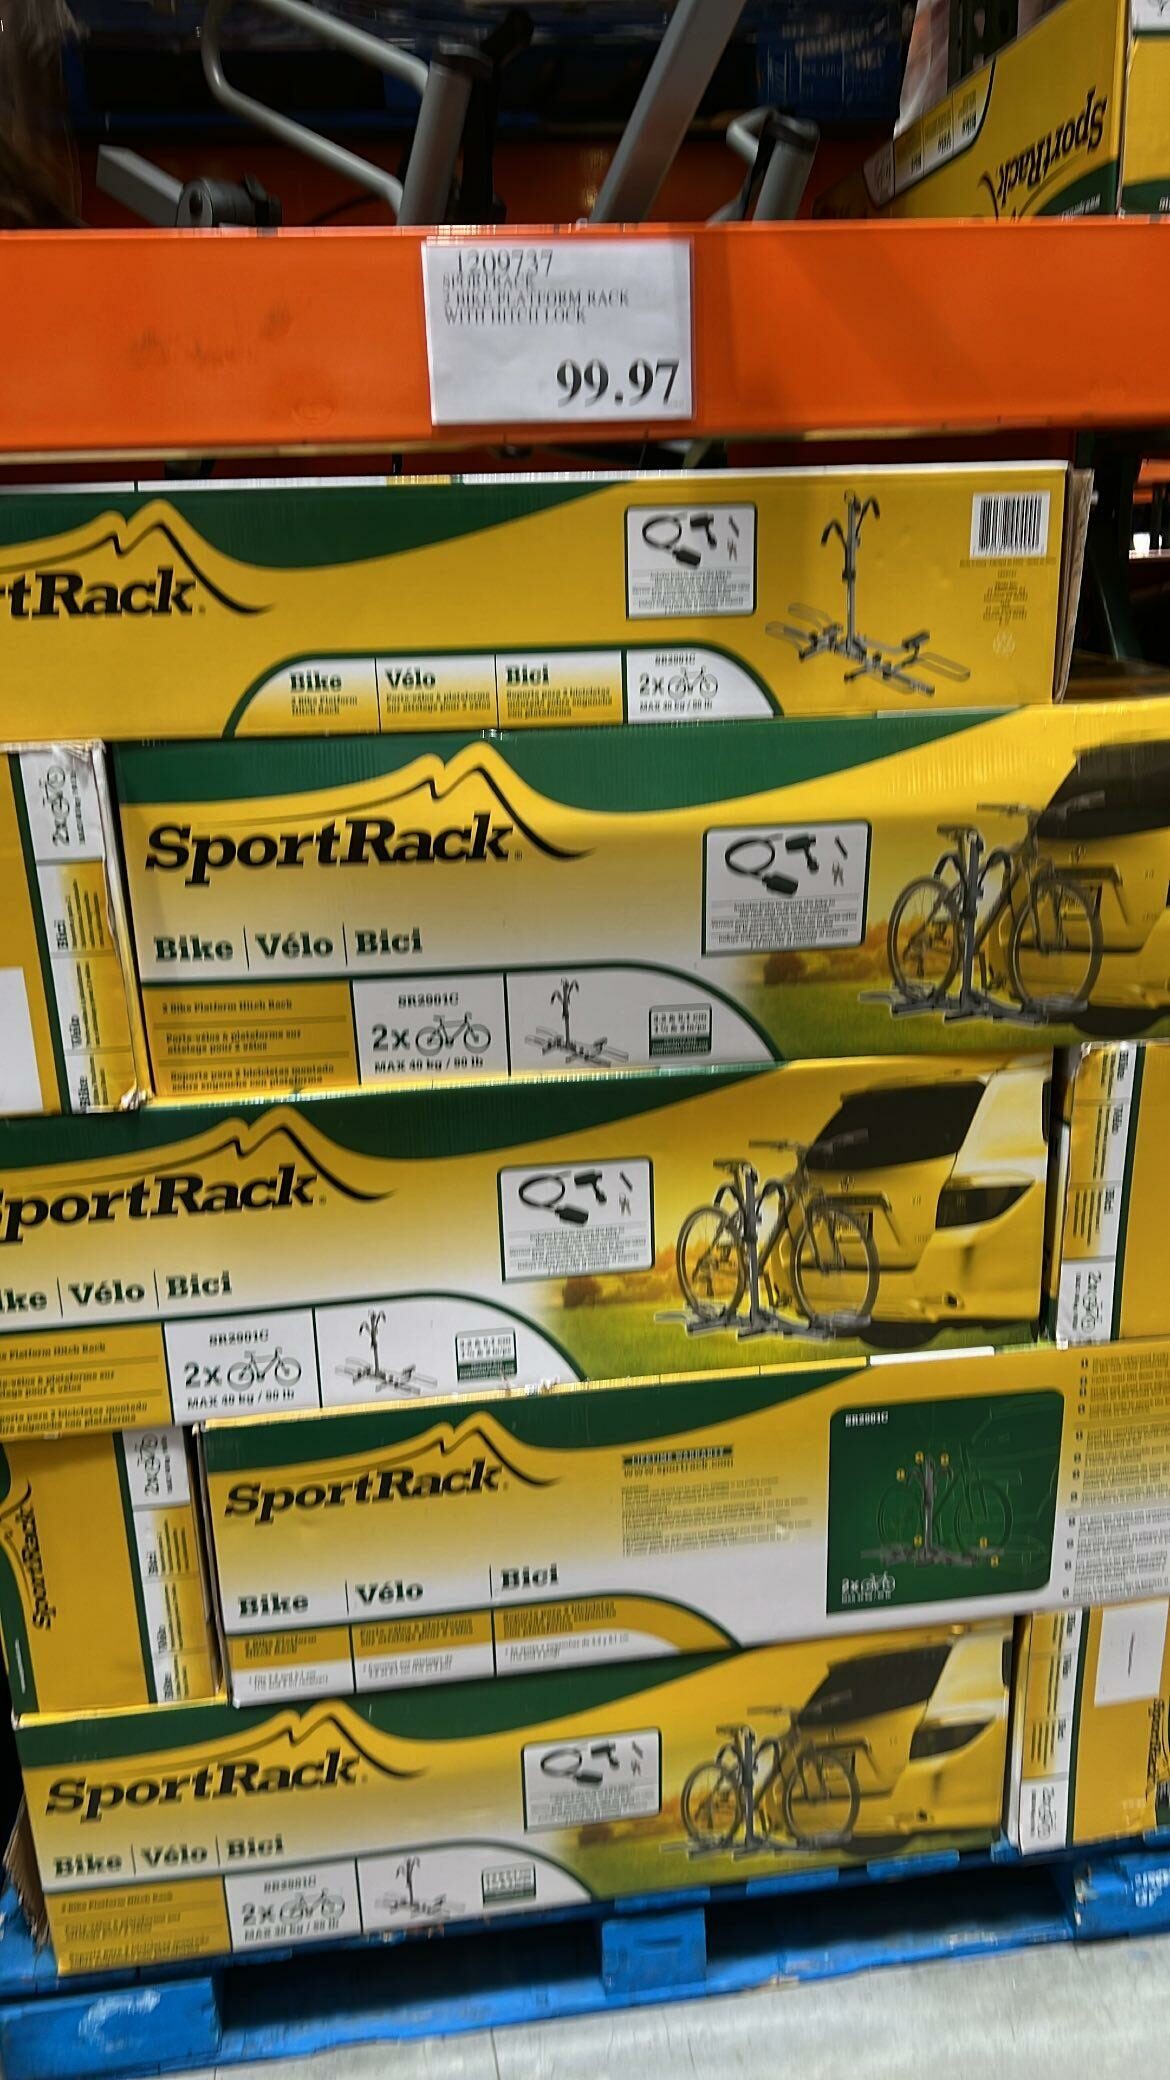 Sportrack 2 自行车平台机架间隙 99.97 加元（原价 199.99 加元）